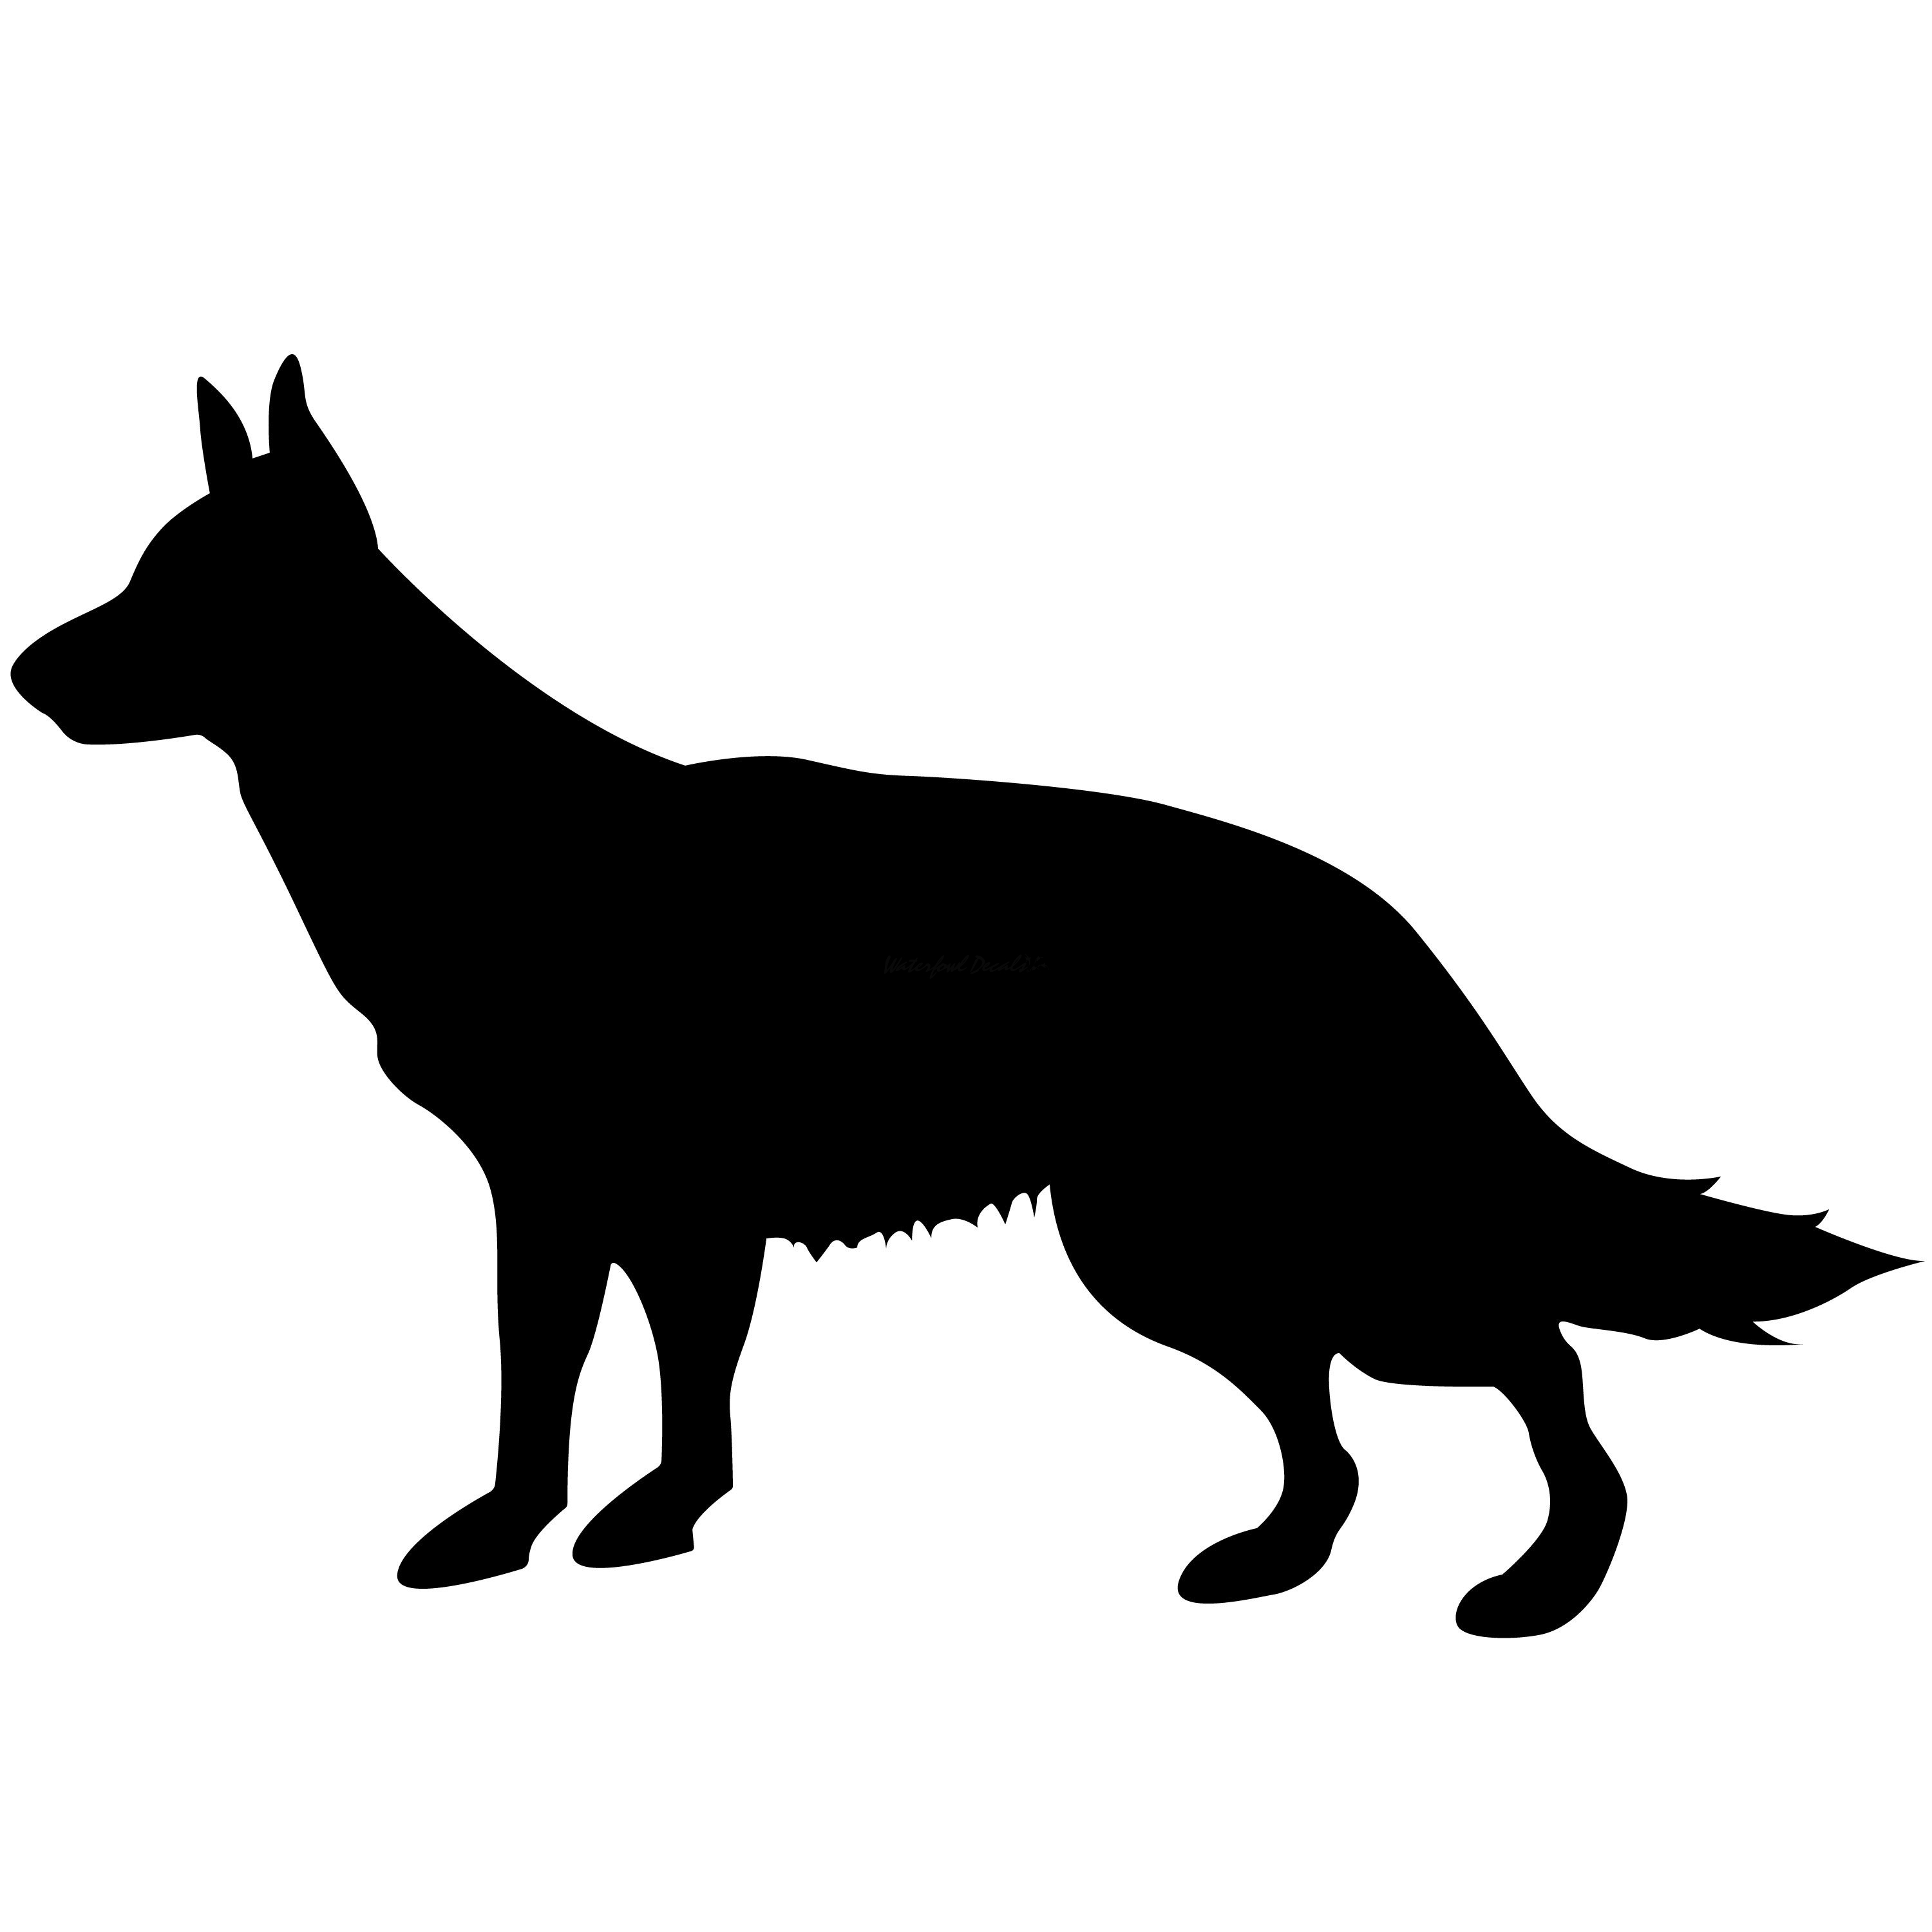 German Shepherd Dog Decal - 1215 - Waterfowldecals